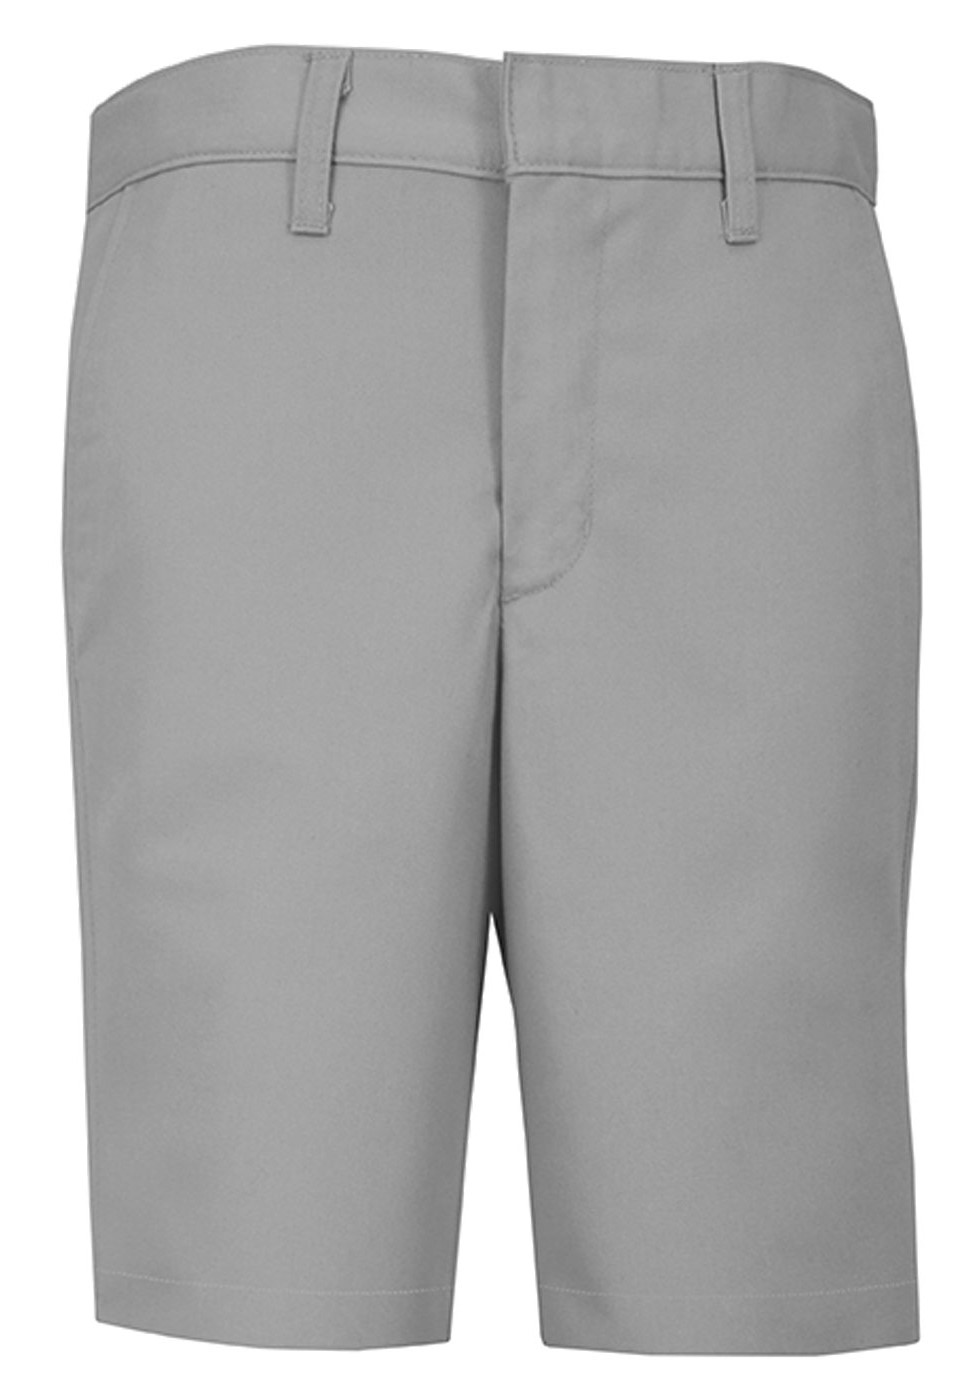 Boys Modern Fit Twill Shorts - Flat Front - #7897/7898 - Light Grey